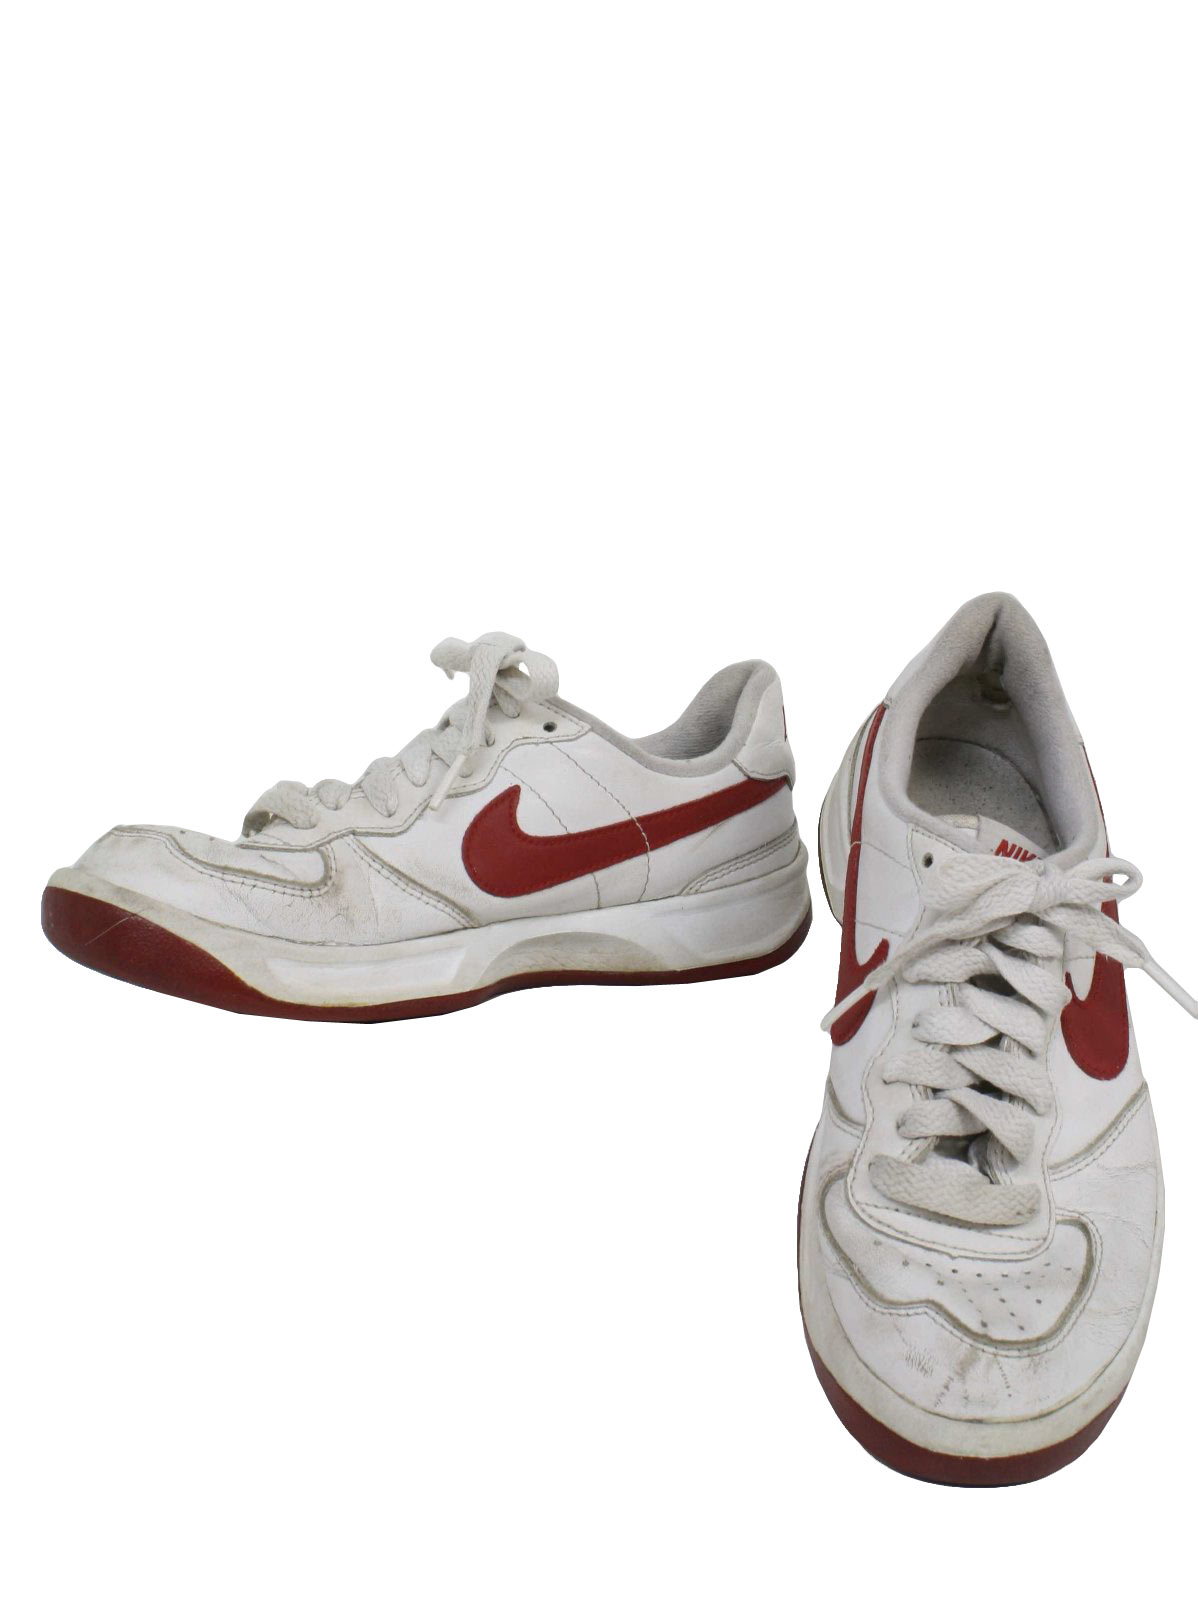 nike tennis shoes 90s